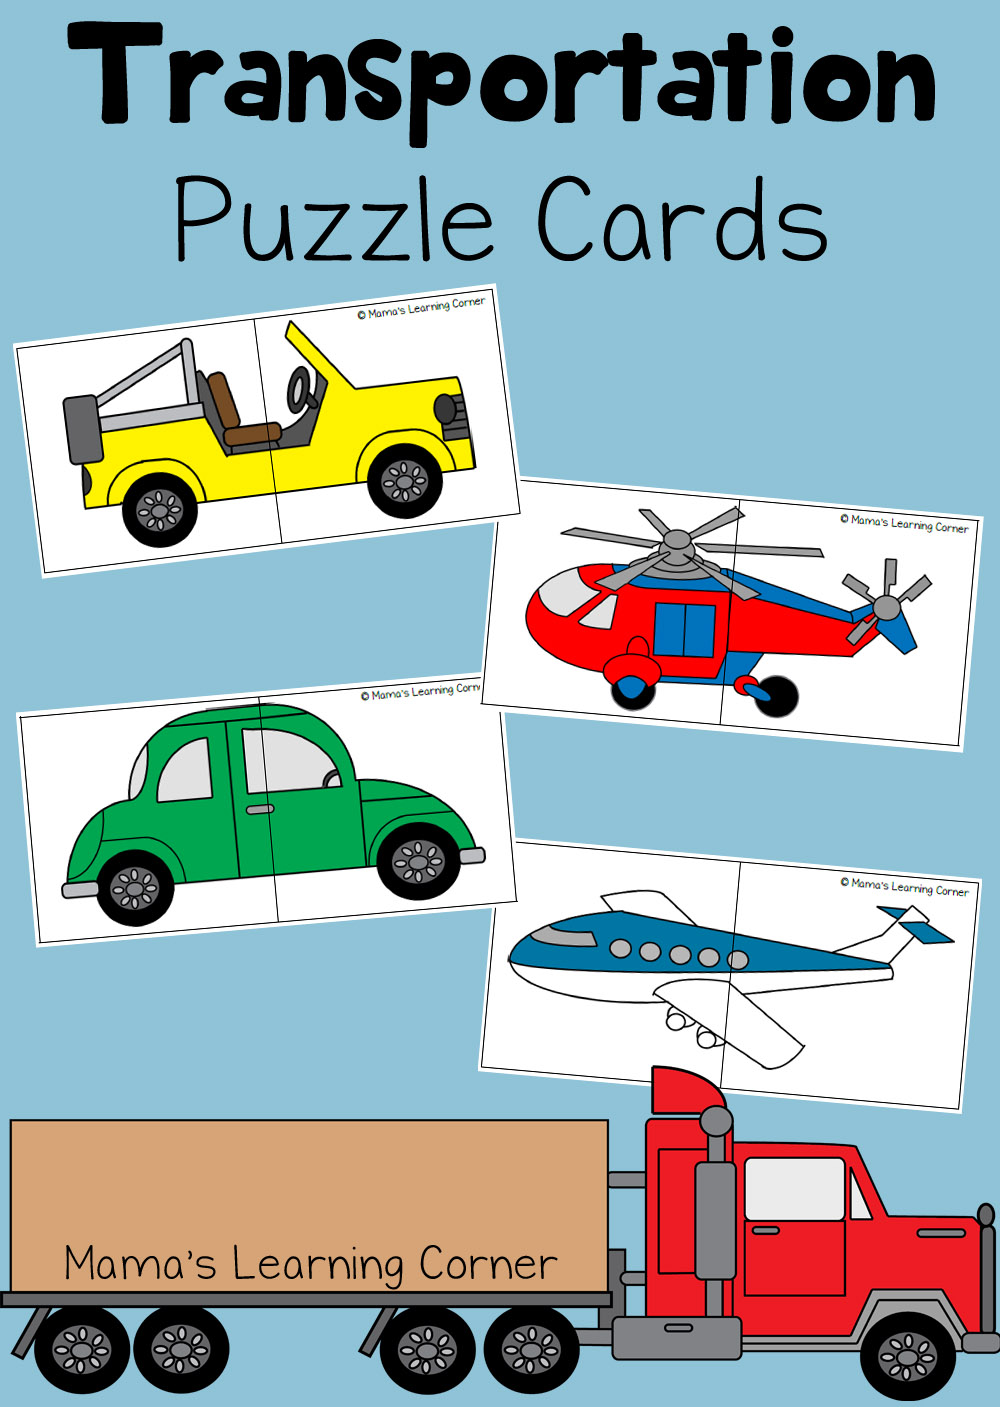 Transportation Puzzle Cards